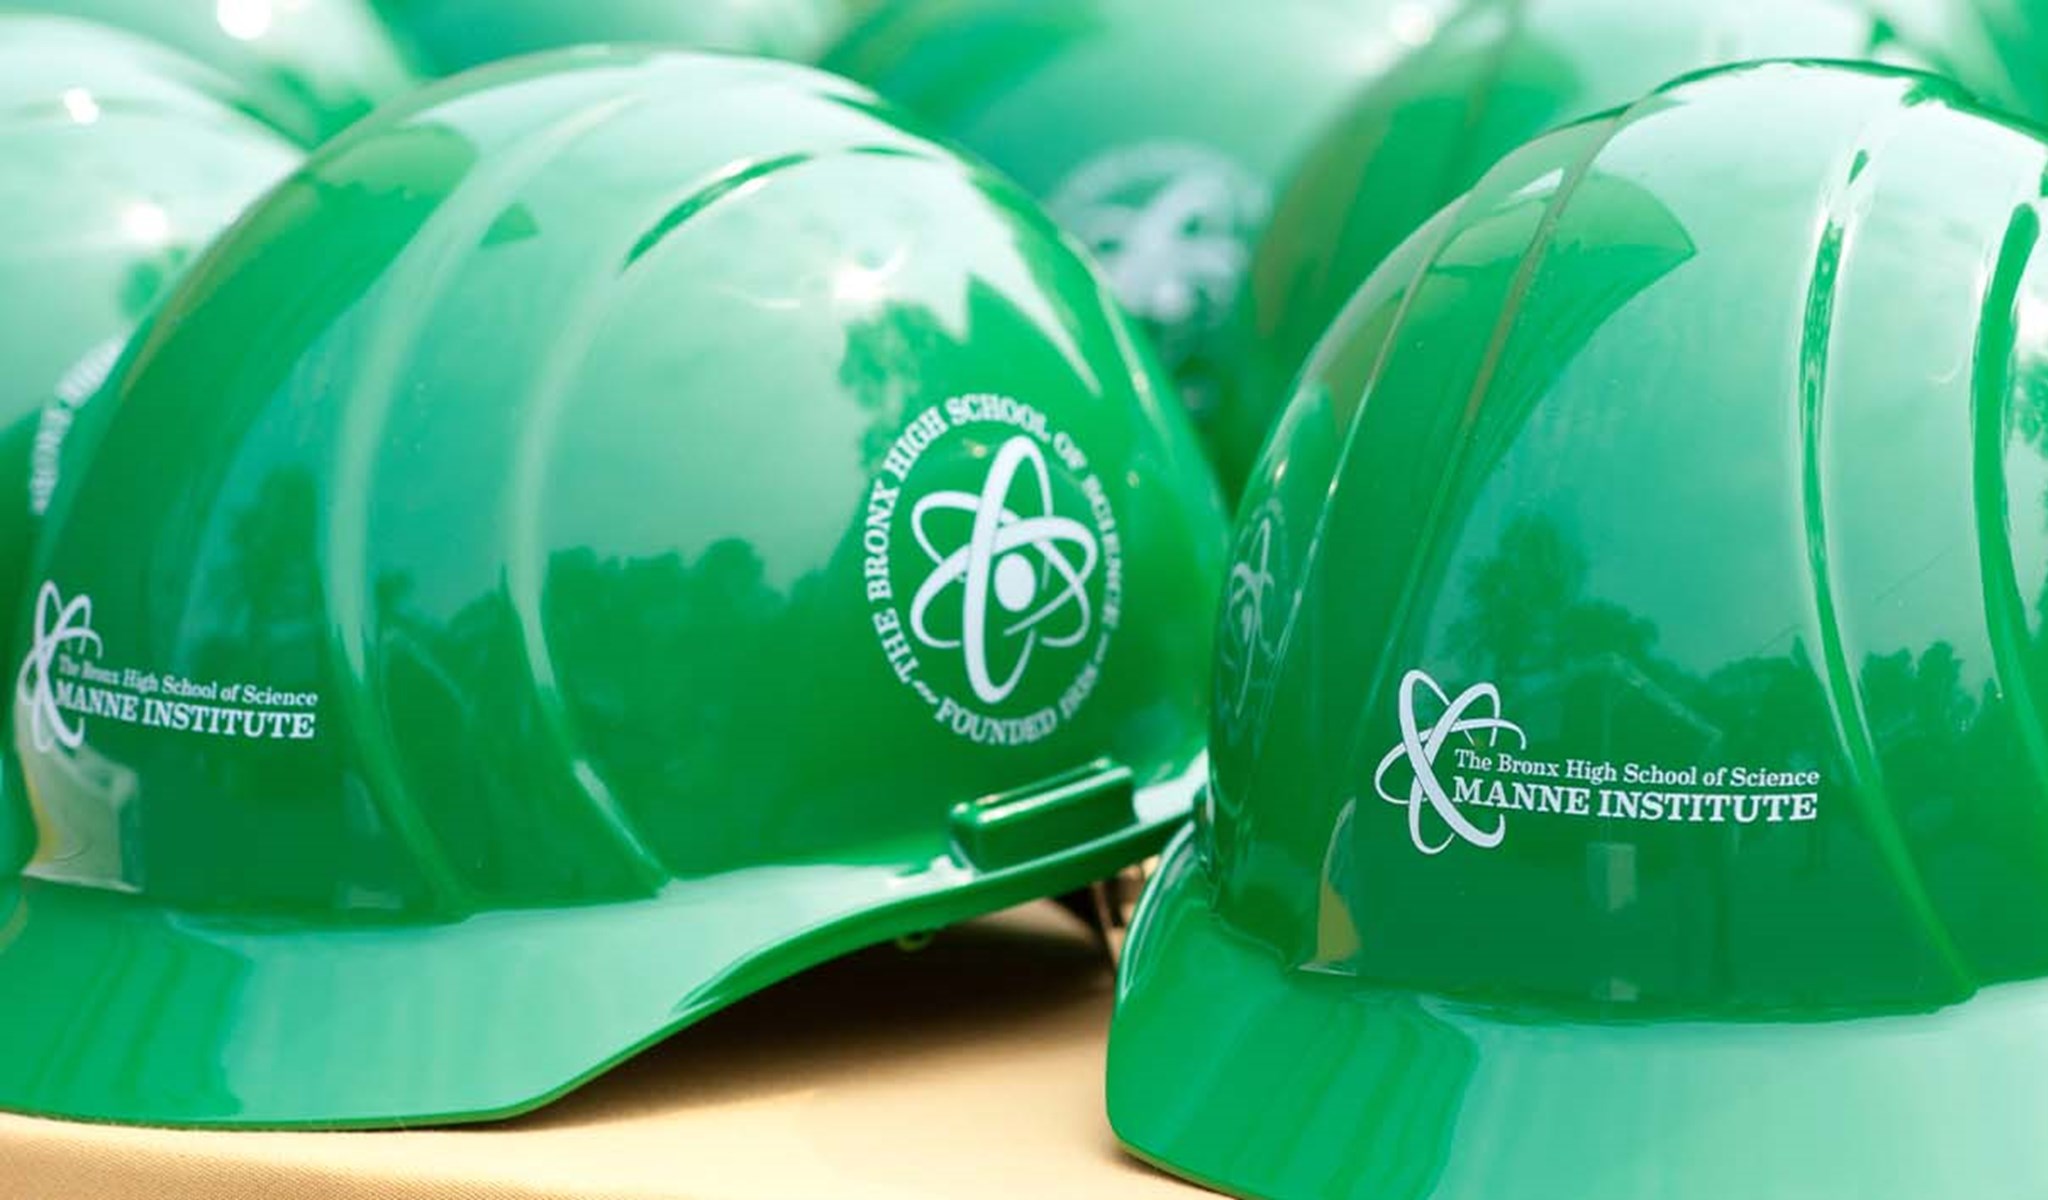 Green construction worker helmets